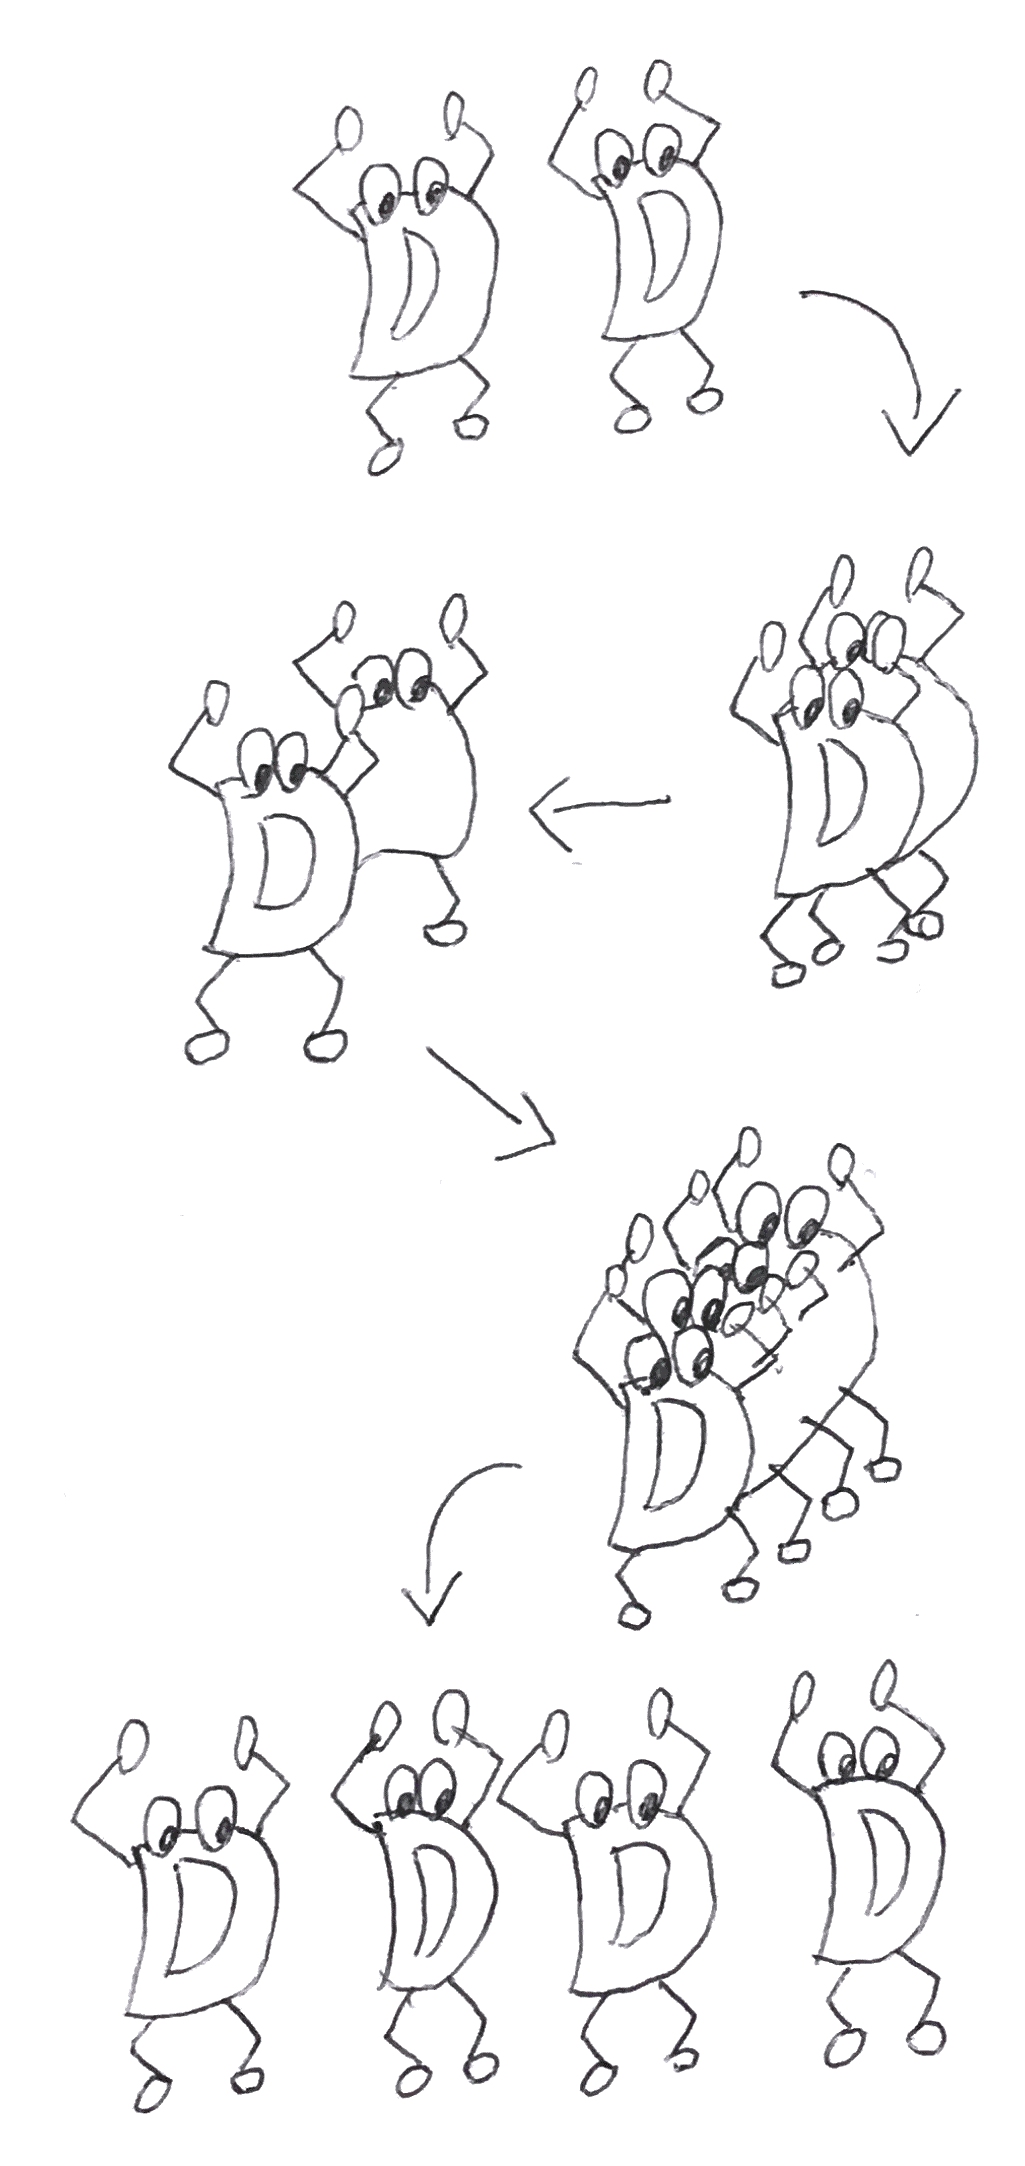 D言語くんの繁殖の様子を描いた現地住民のスケッチ